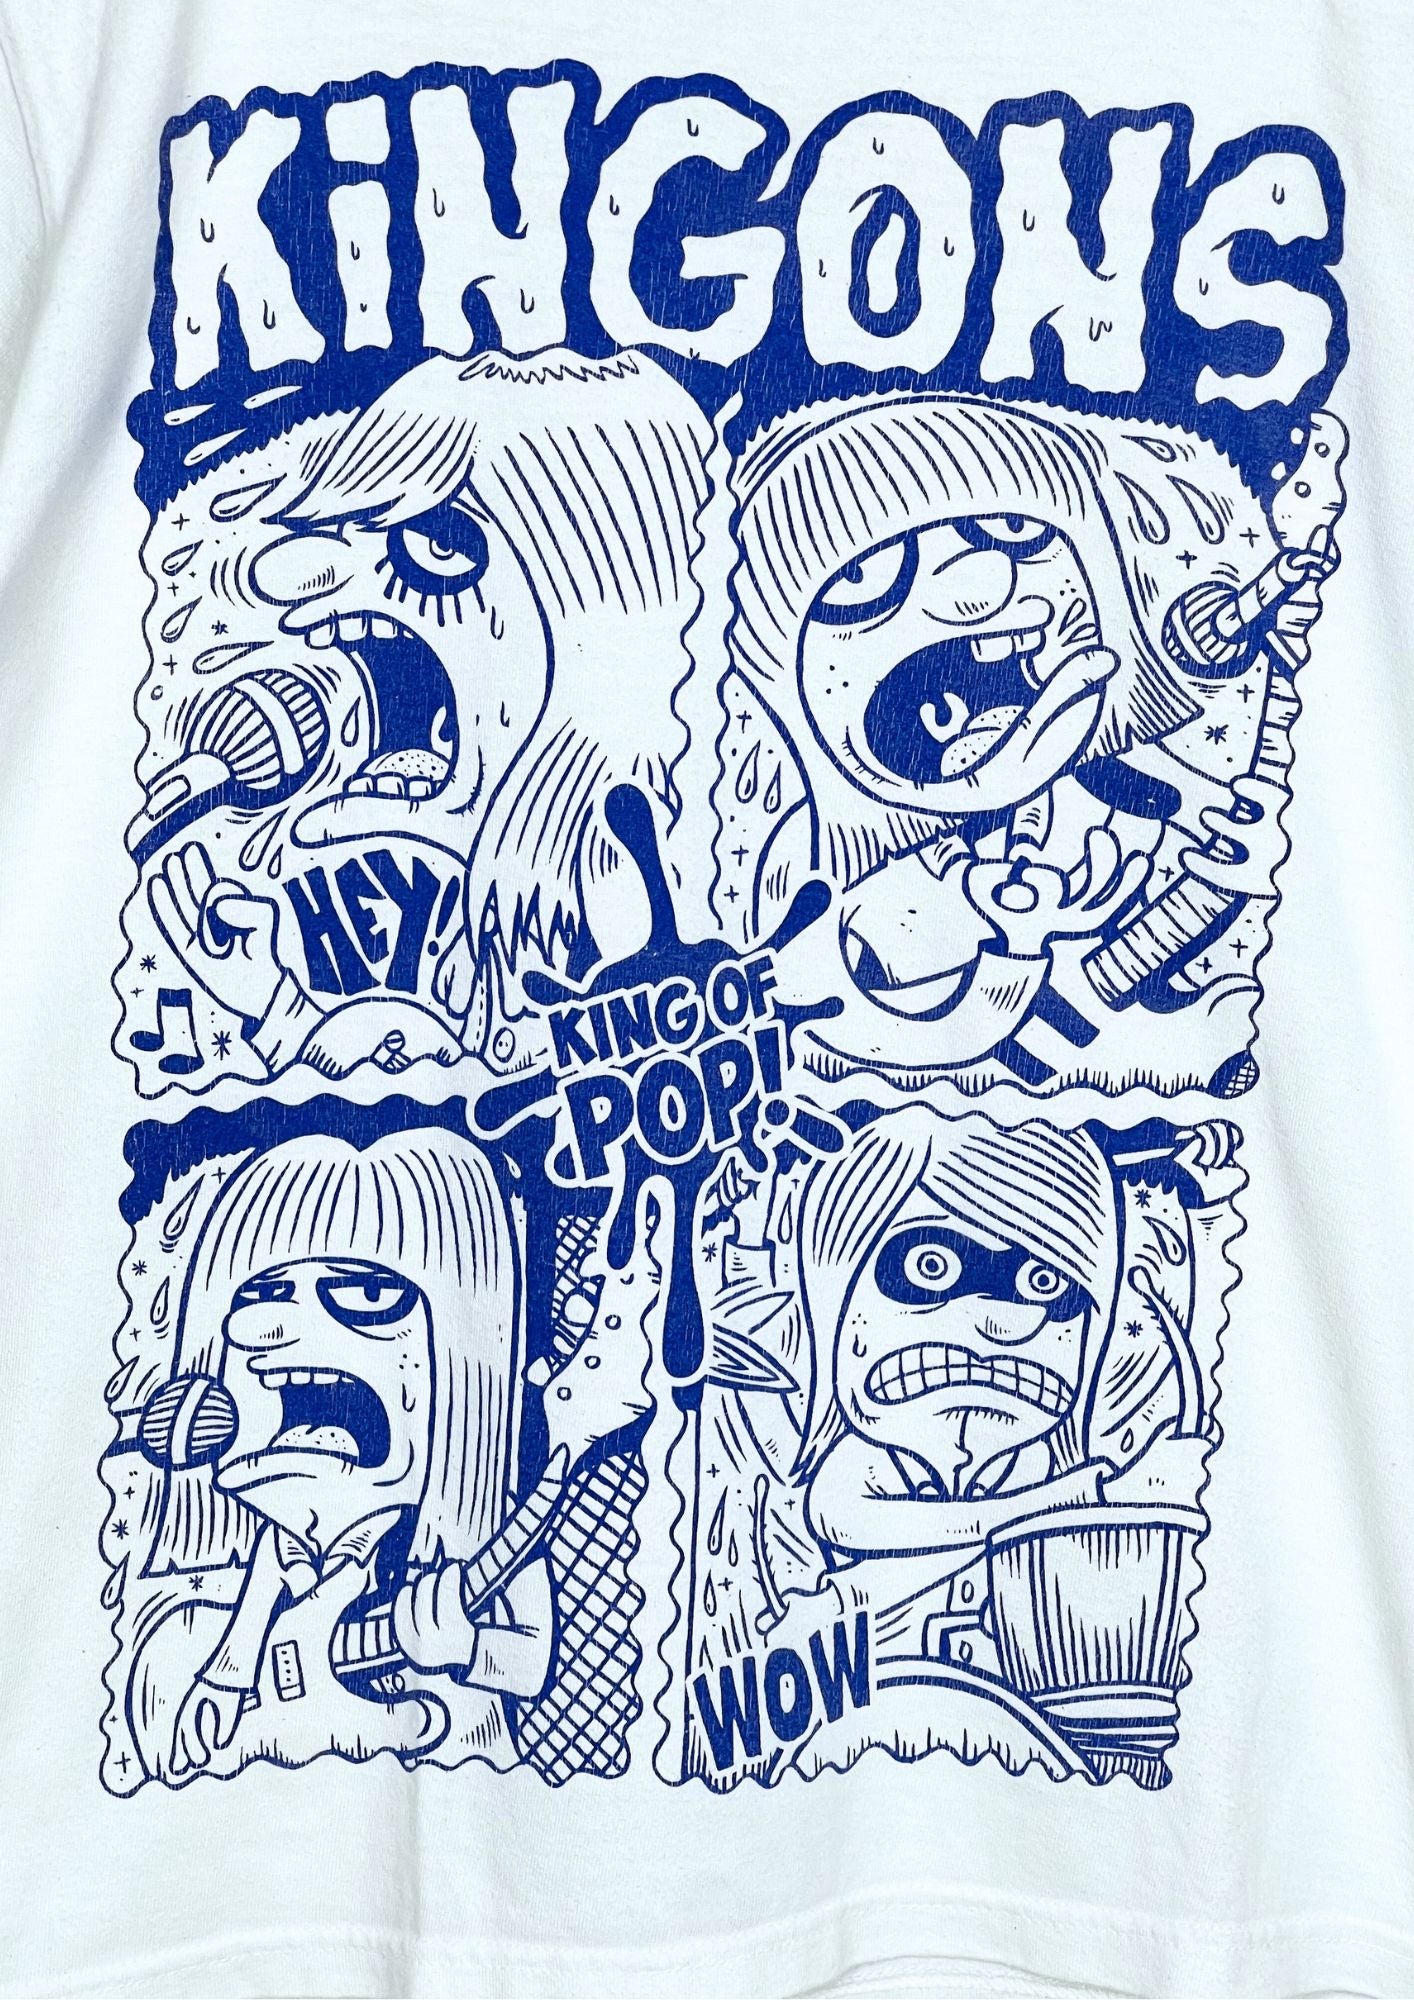 2010s KINGONS ‘King of Pop’ Japanese Punk Band T-shirt